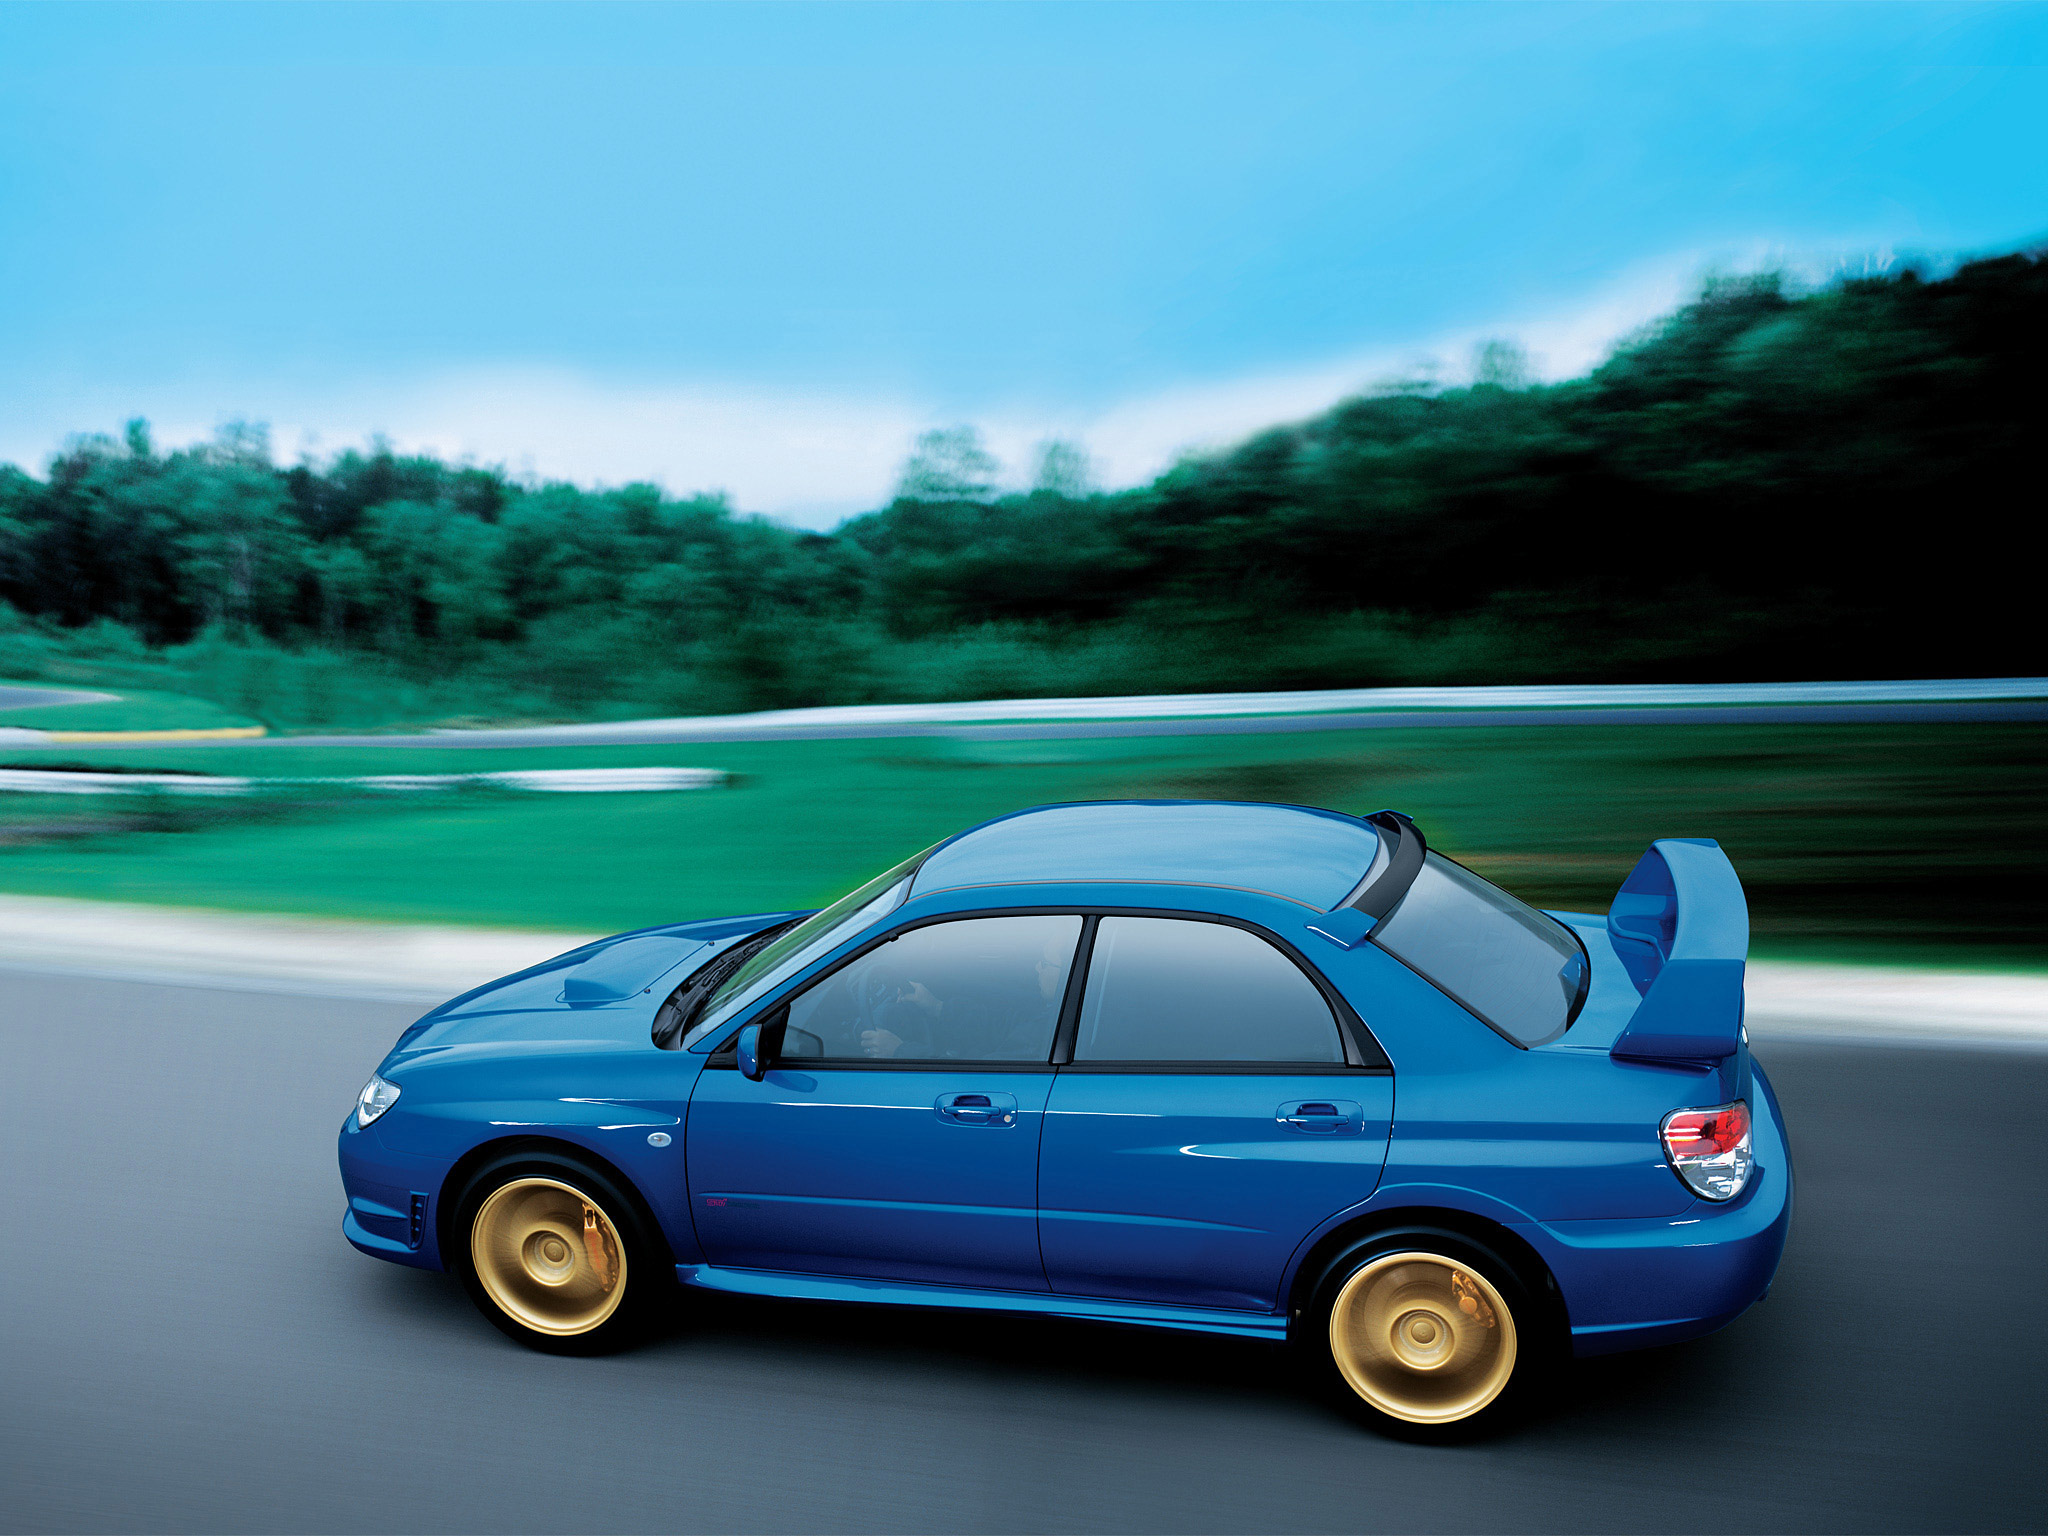  2007 Subaru Impreza WRX STI Wallpaper.